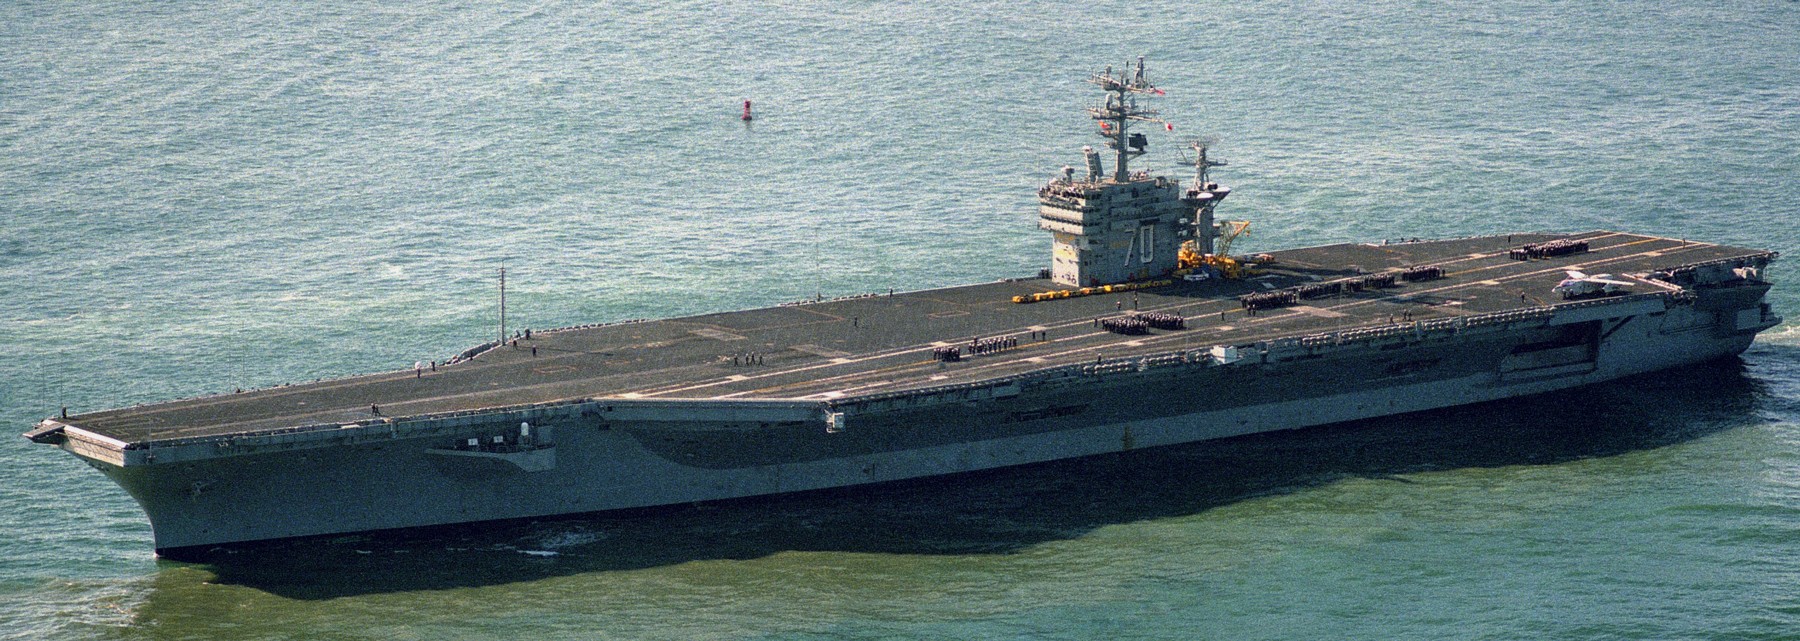 cvn-70 uss carl vinson nimitz class aircraft carrier us navy san francisco 47